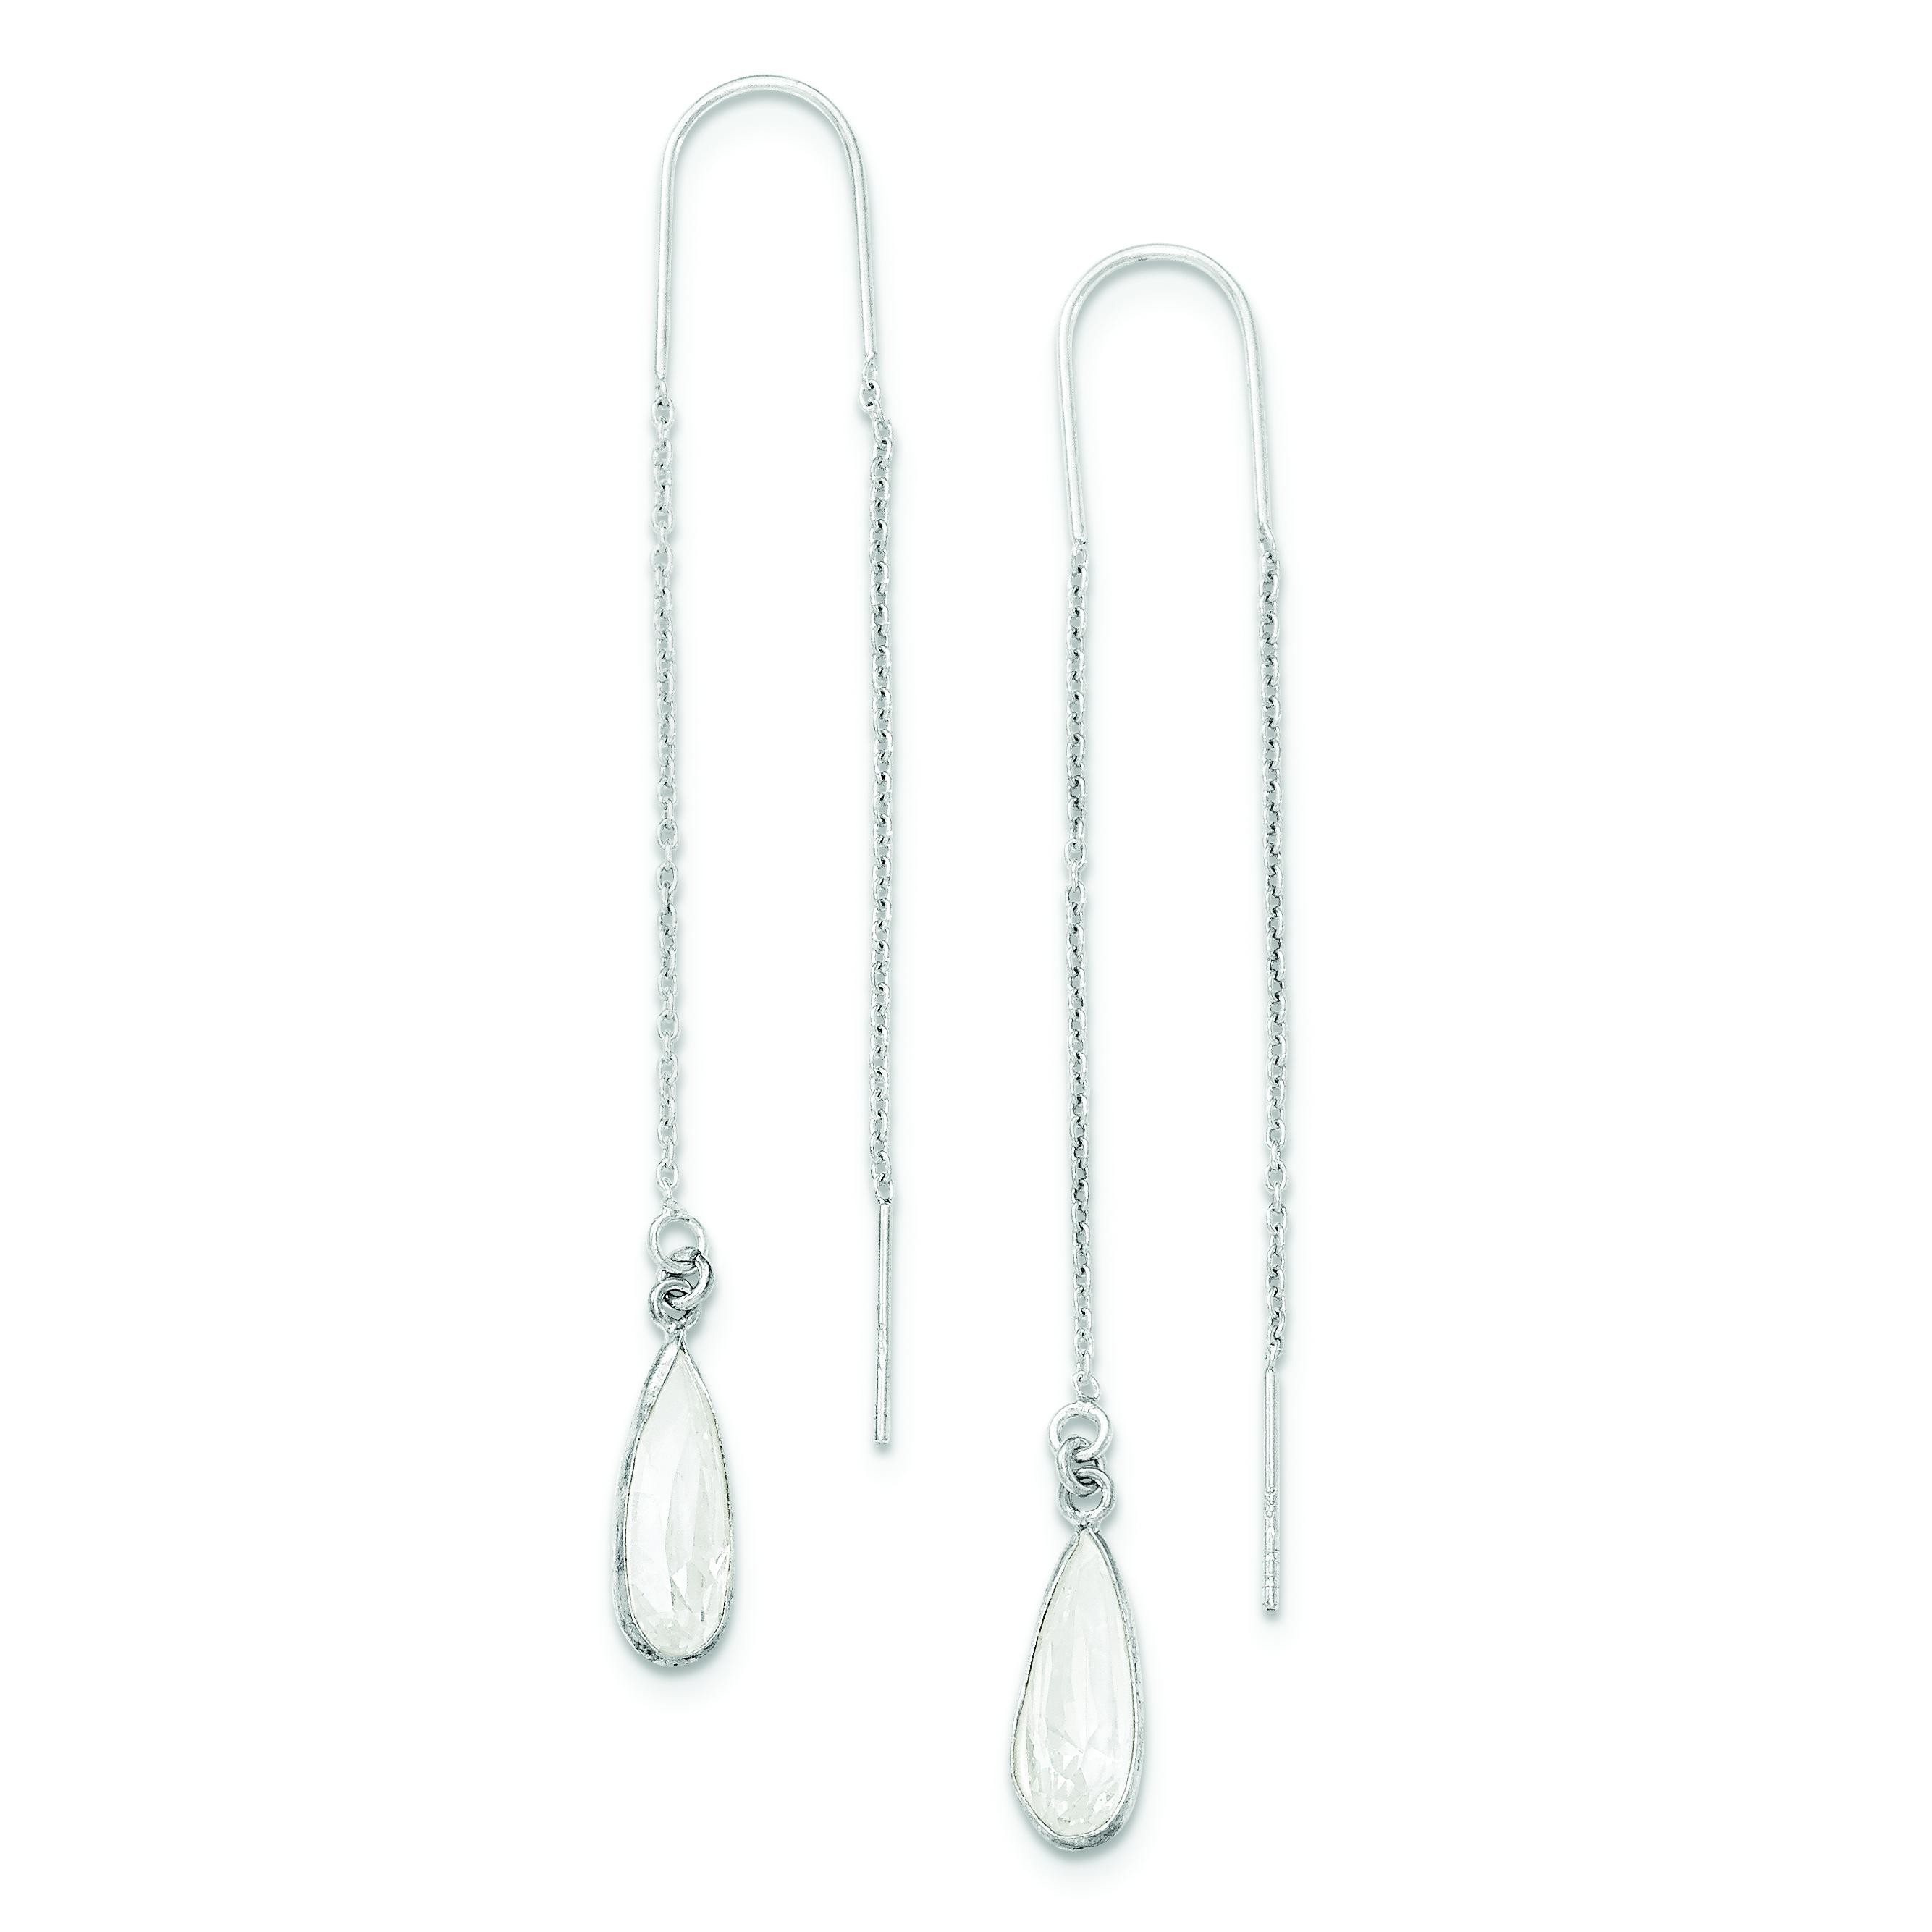 Clear Crystal Teardrop Threader Earrings in Sterling Silver